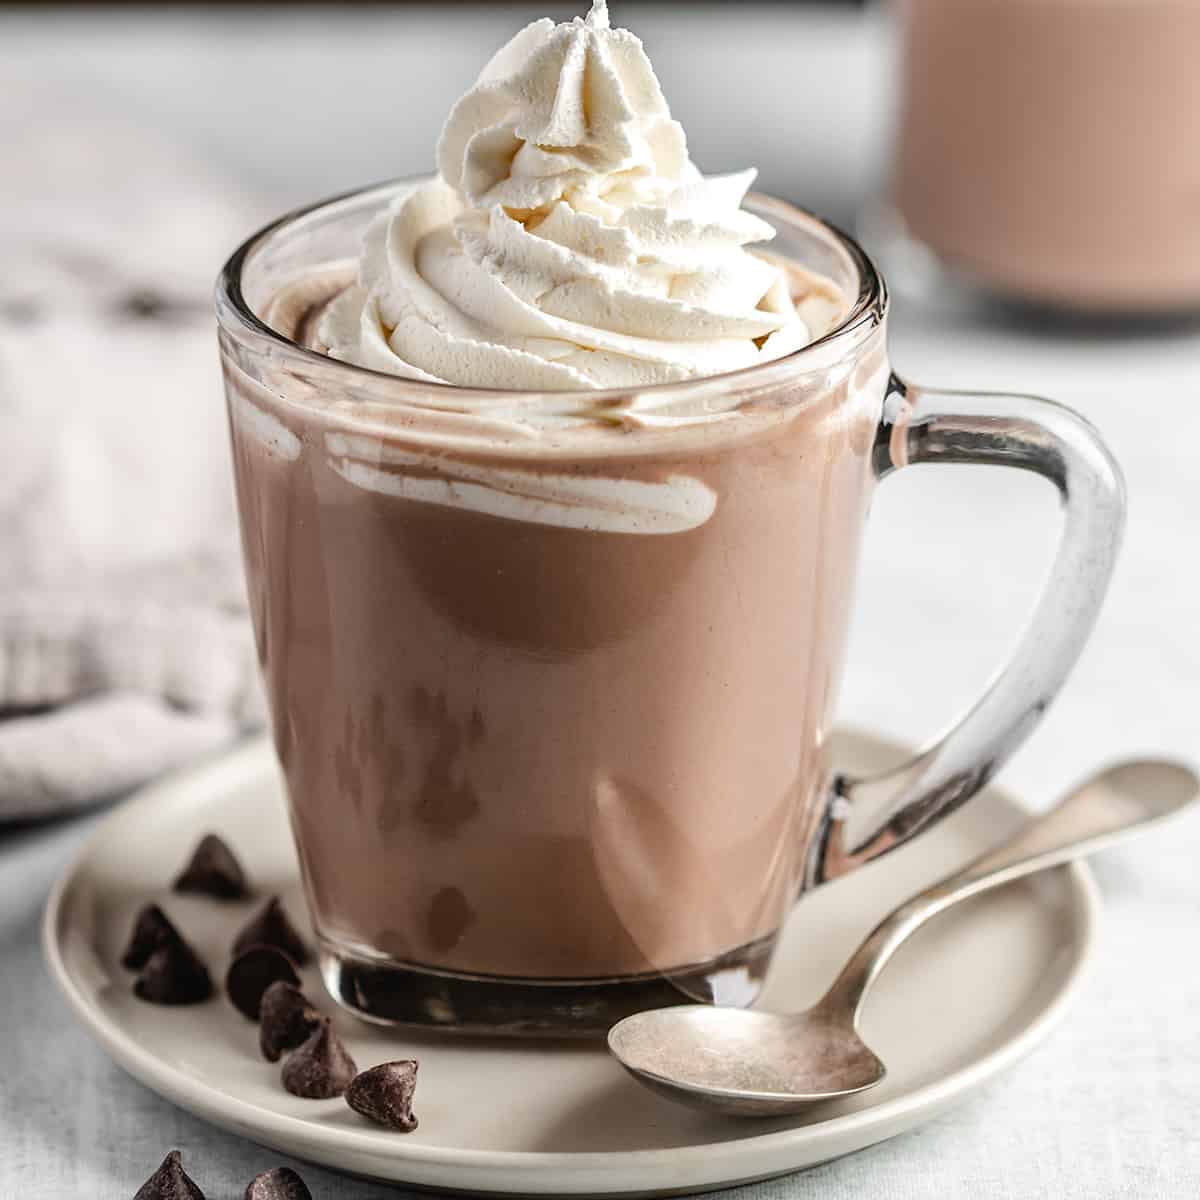 a glass mug of Crockpot Hot Chocolate topped with whipped cream